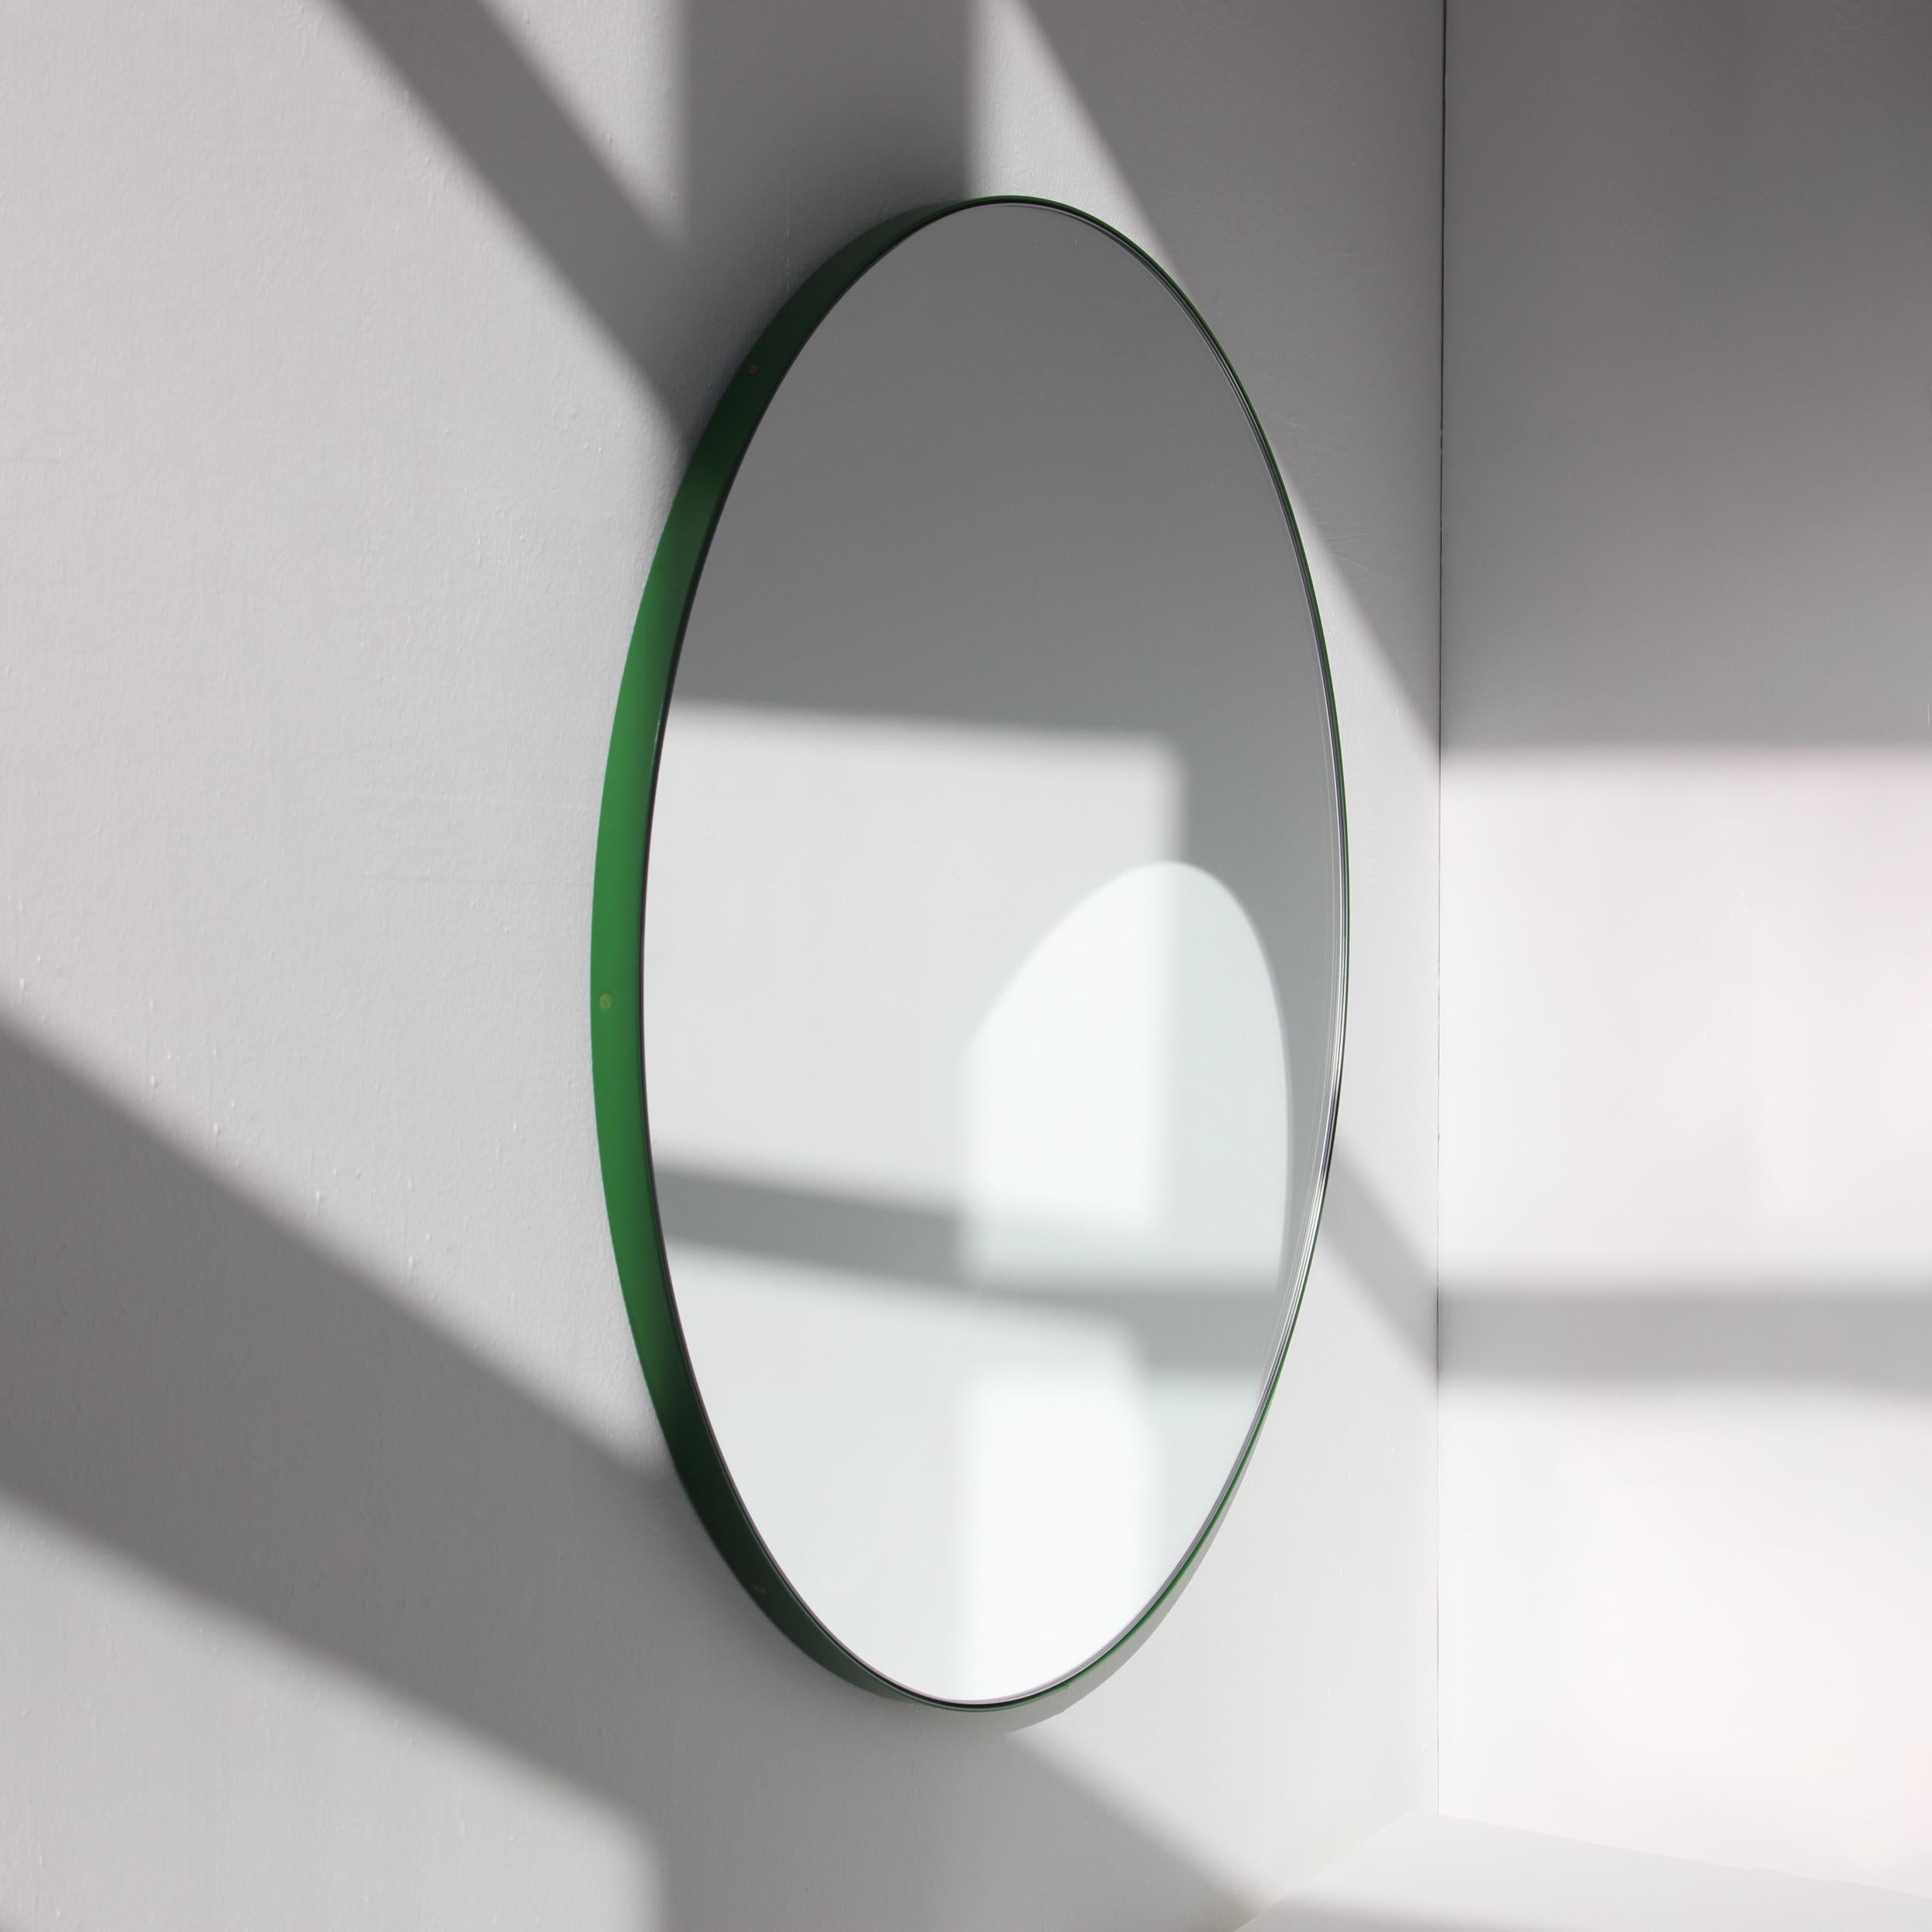 Organique Miroir moderne rond Orbis avec cadre vert, personnalisable, moyen en vente